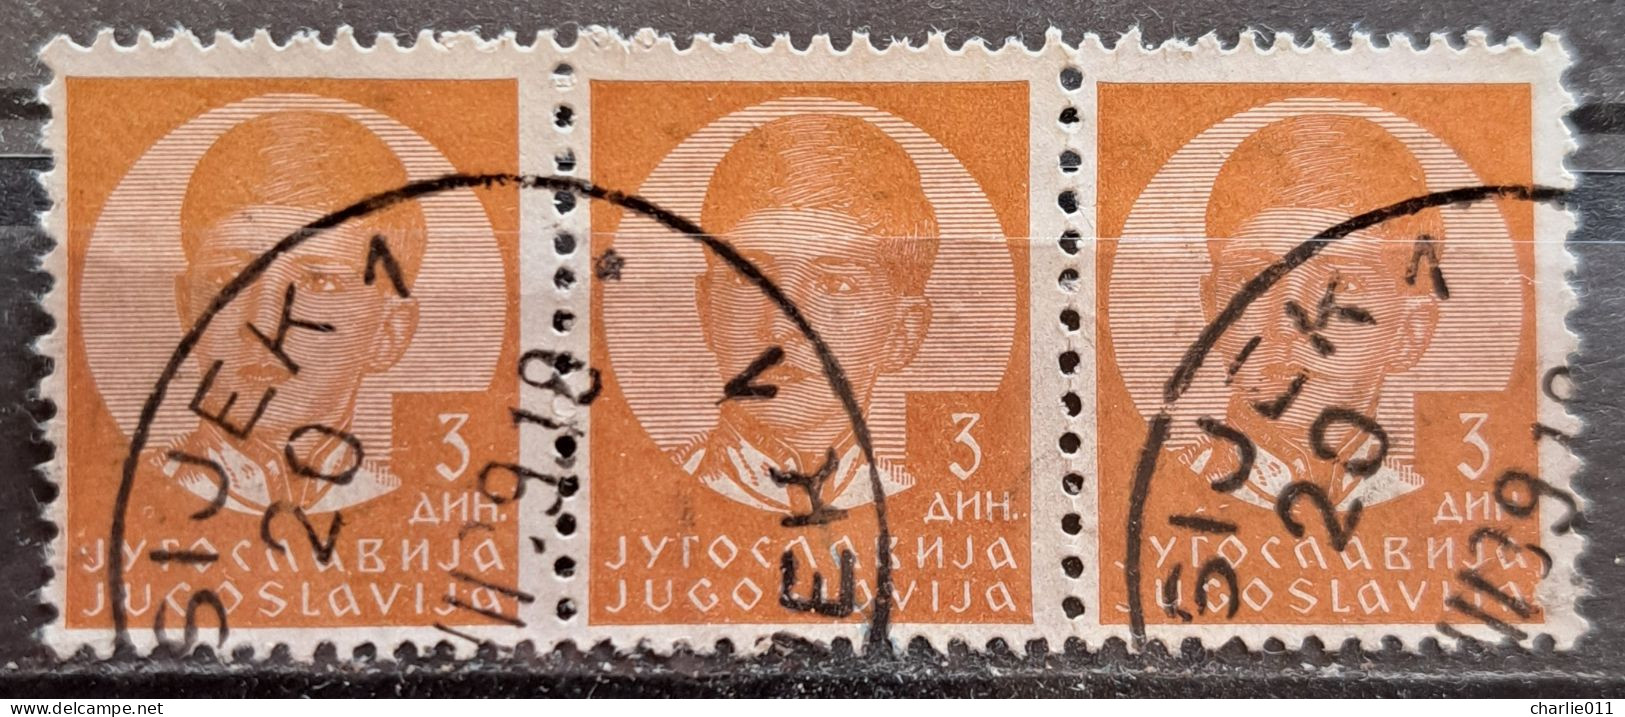 KING PETER II-3 DIN.-3 IN RAW-POSTMARK OSIJEK-ERROR-CROATIA-YUGOSLAVIA-1939 - Used Stamps